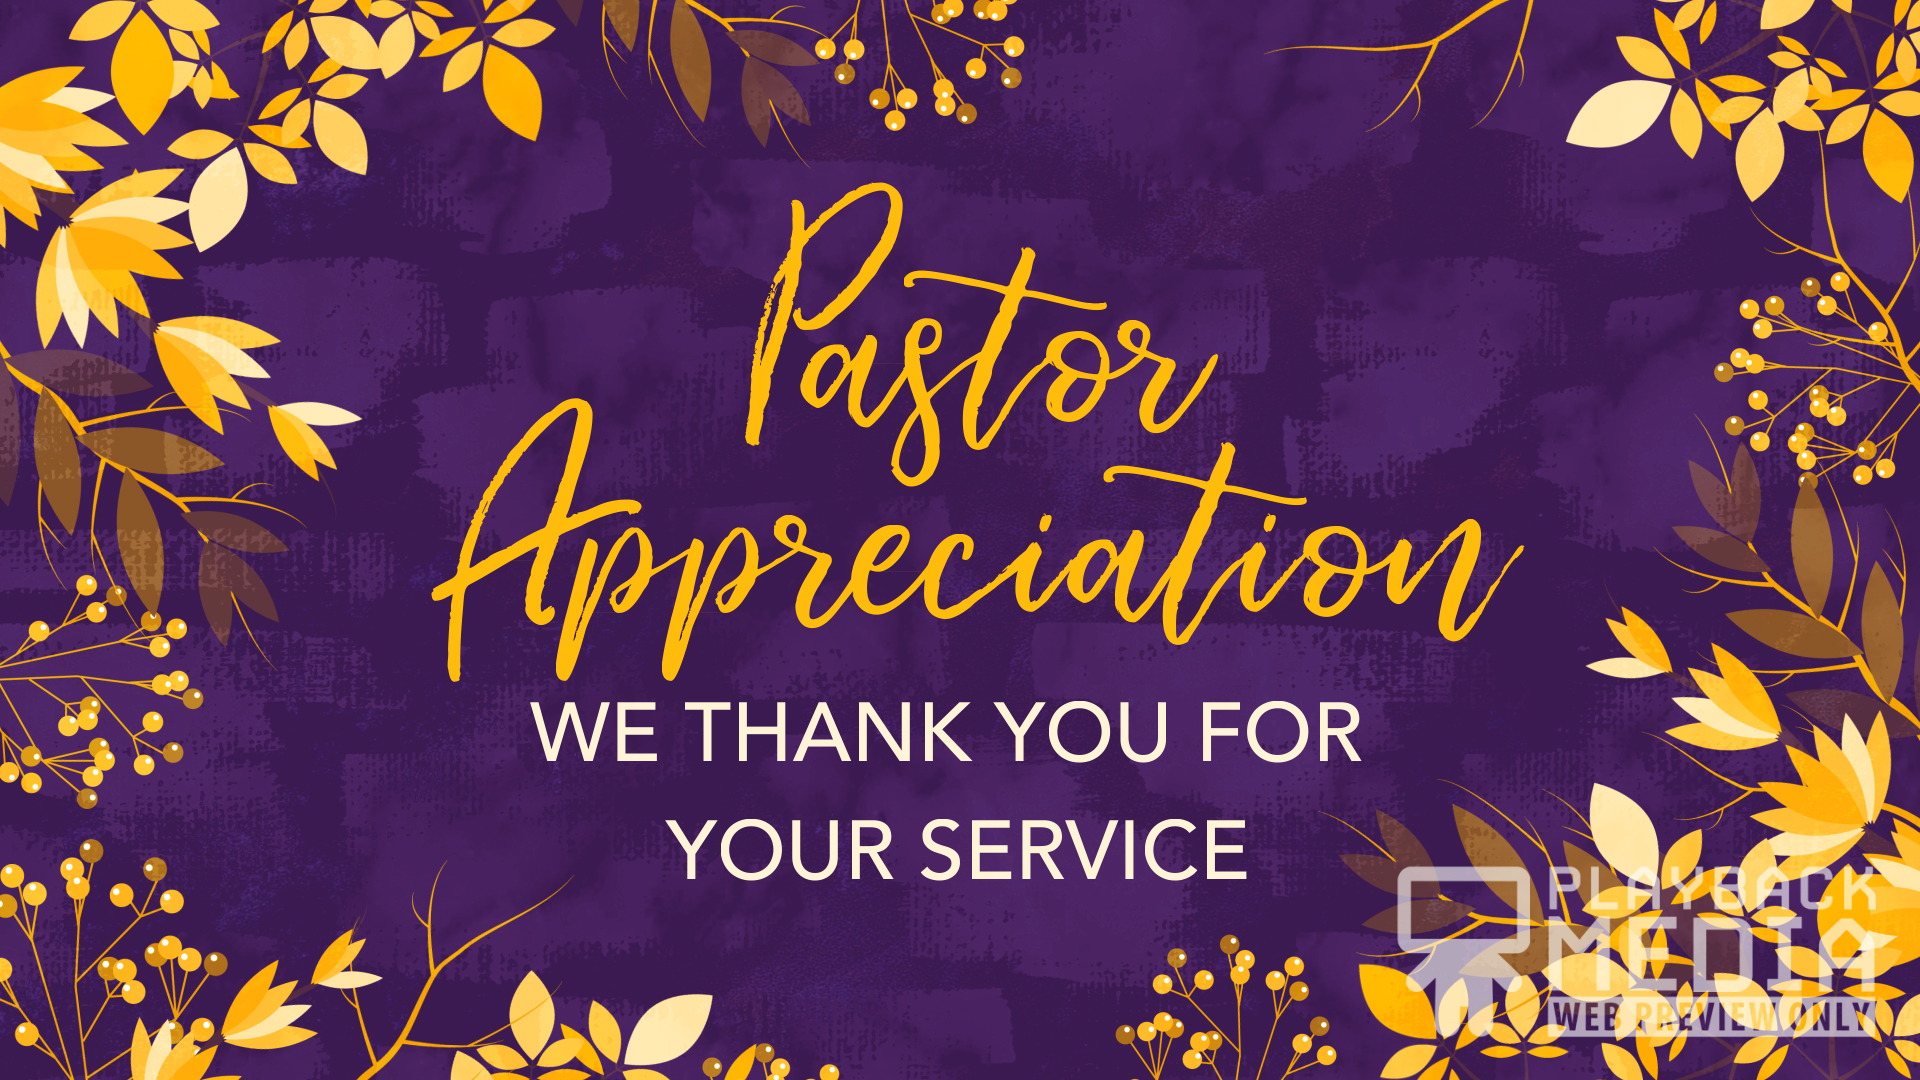 Pastor Appreciation Logo